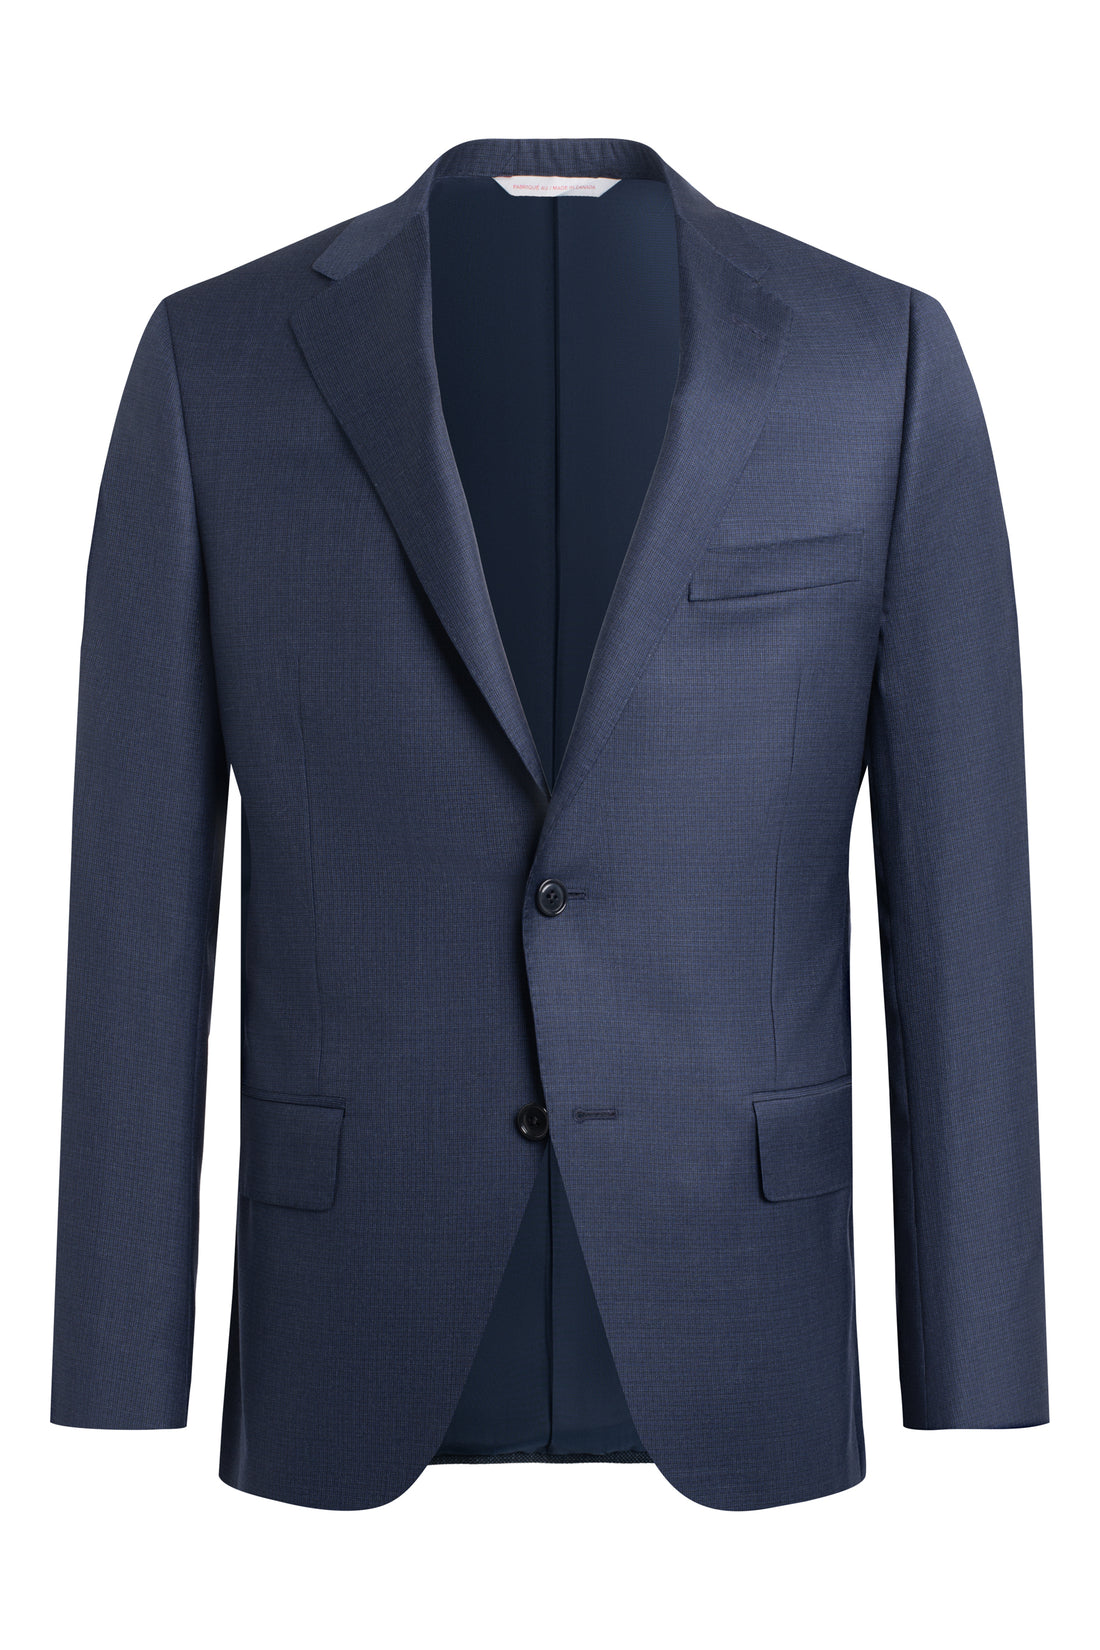 Blue Smart Wool Suit front Jacket